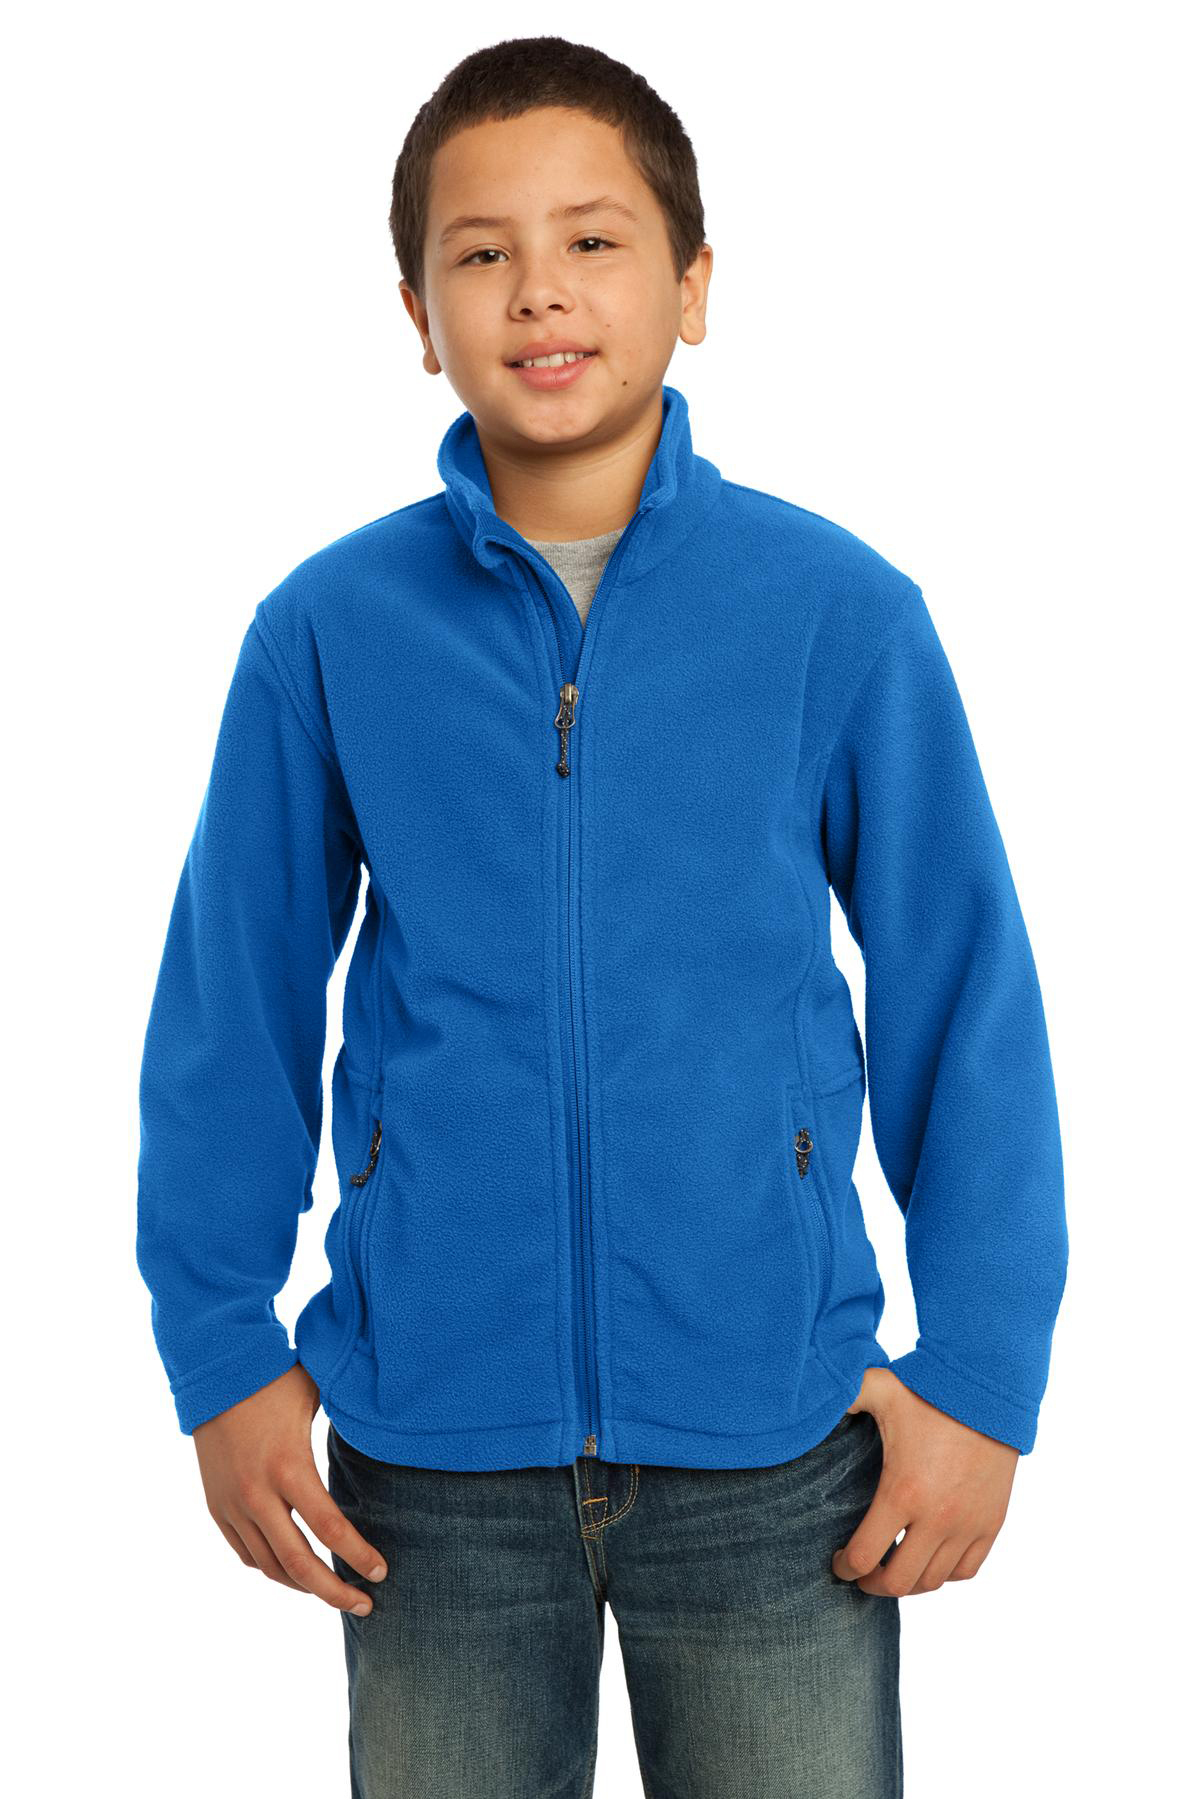 Y217  Port Authority® Youth Value Fleece Jacket